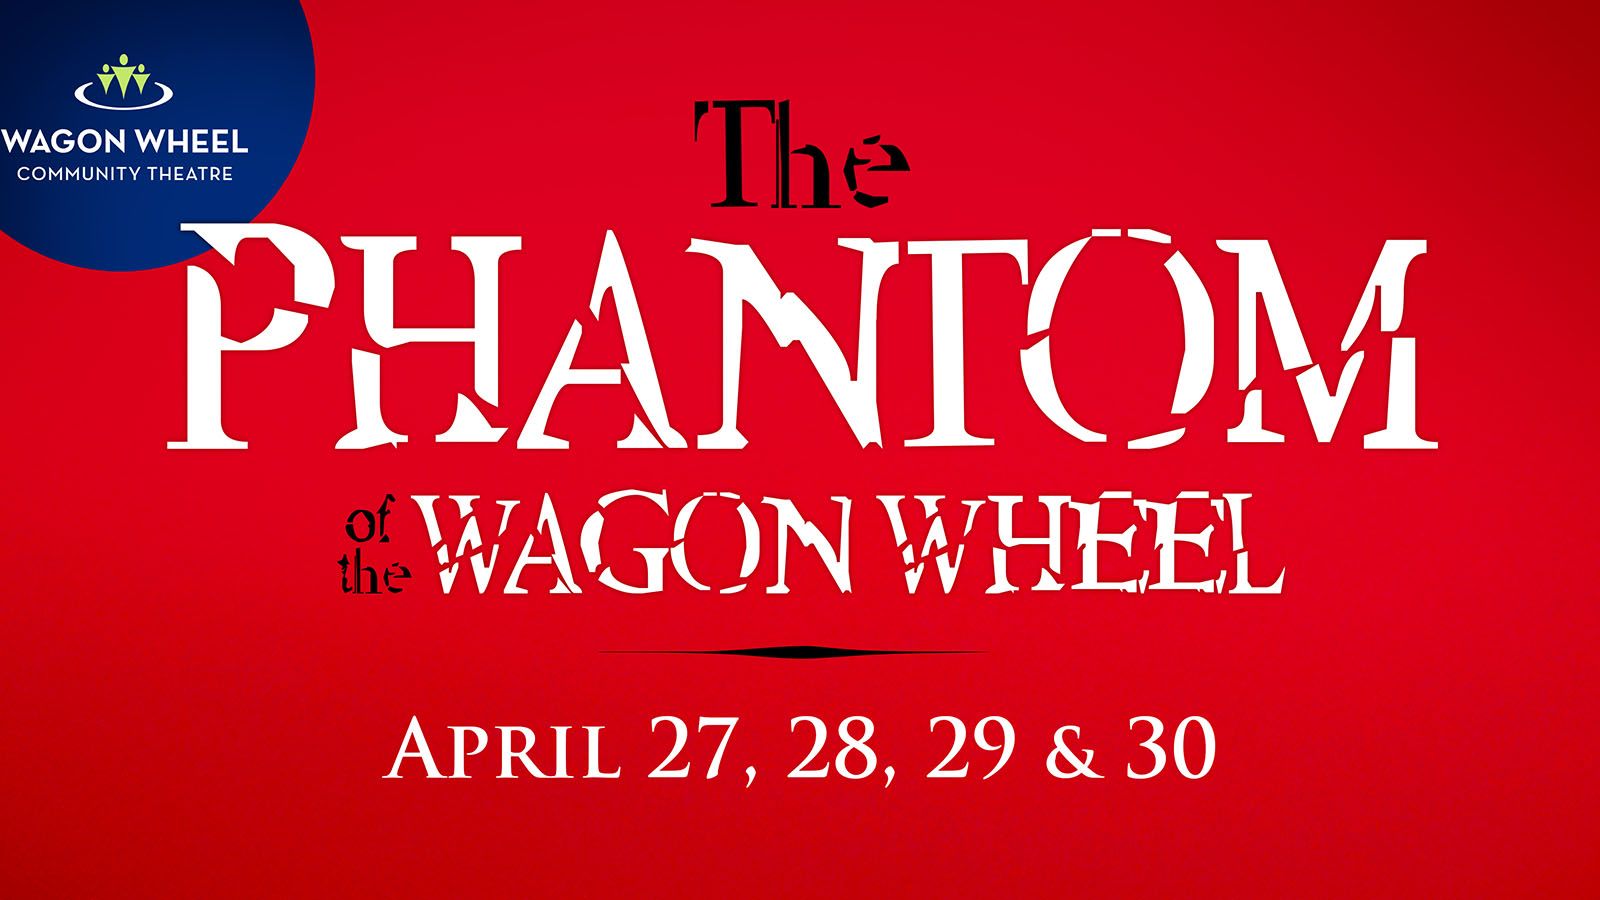 The Phantom of the Wagon Wheel runs April 27-30.